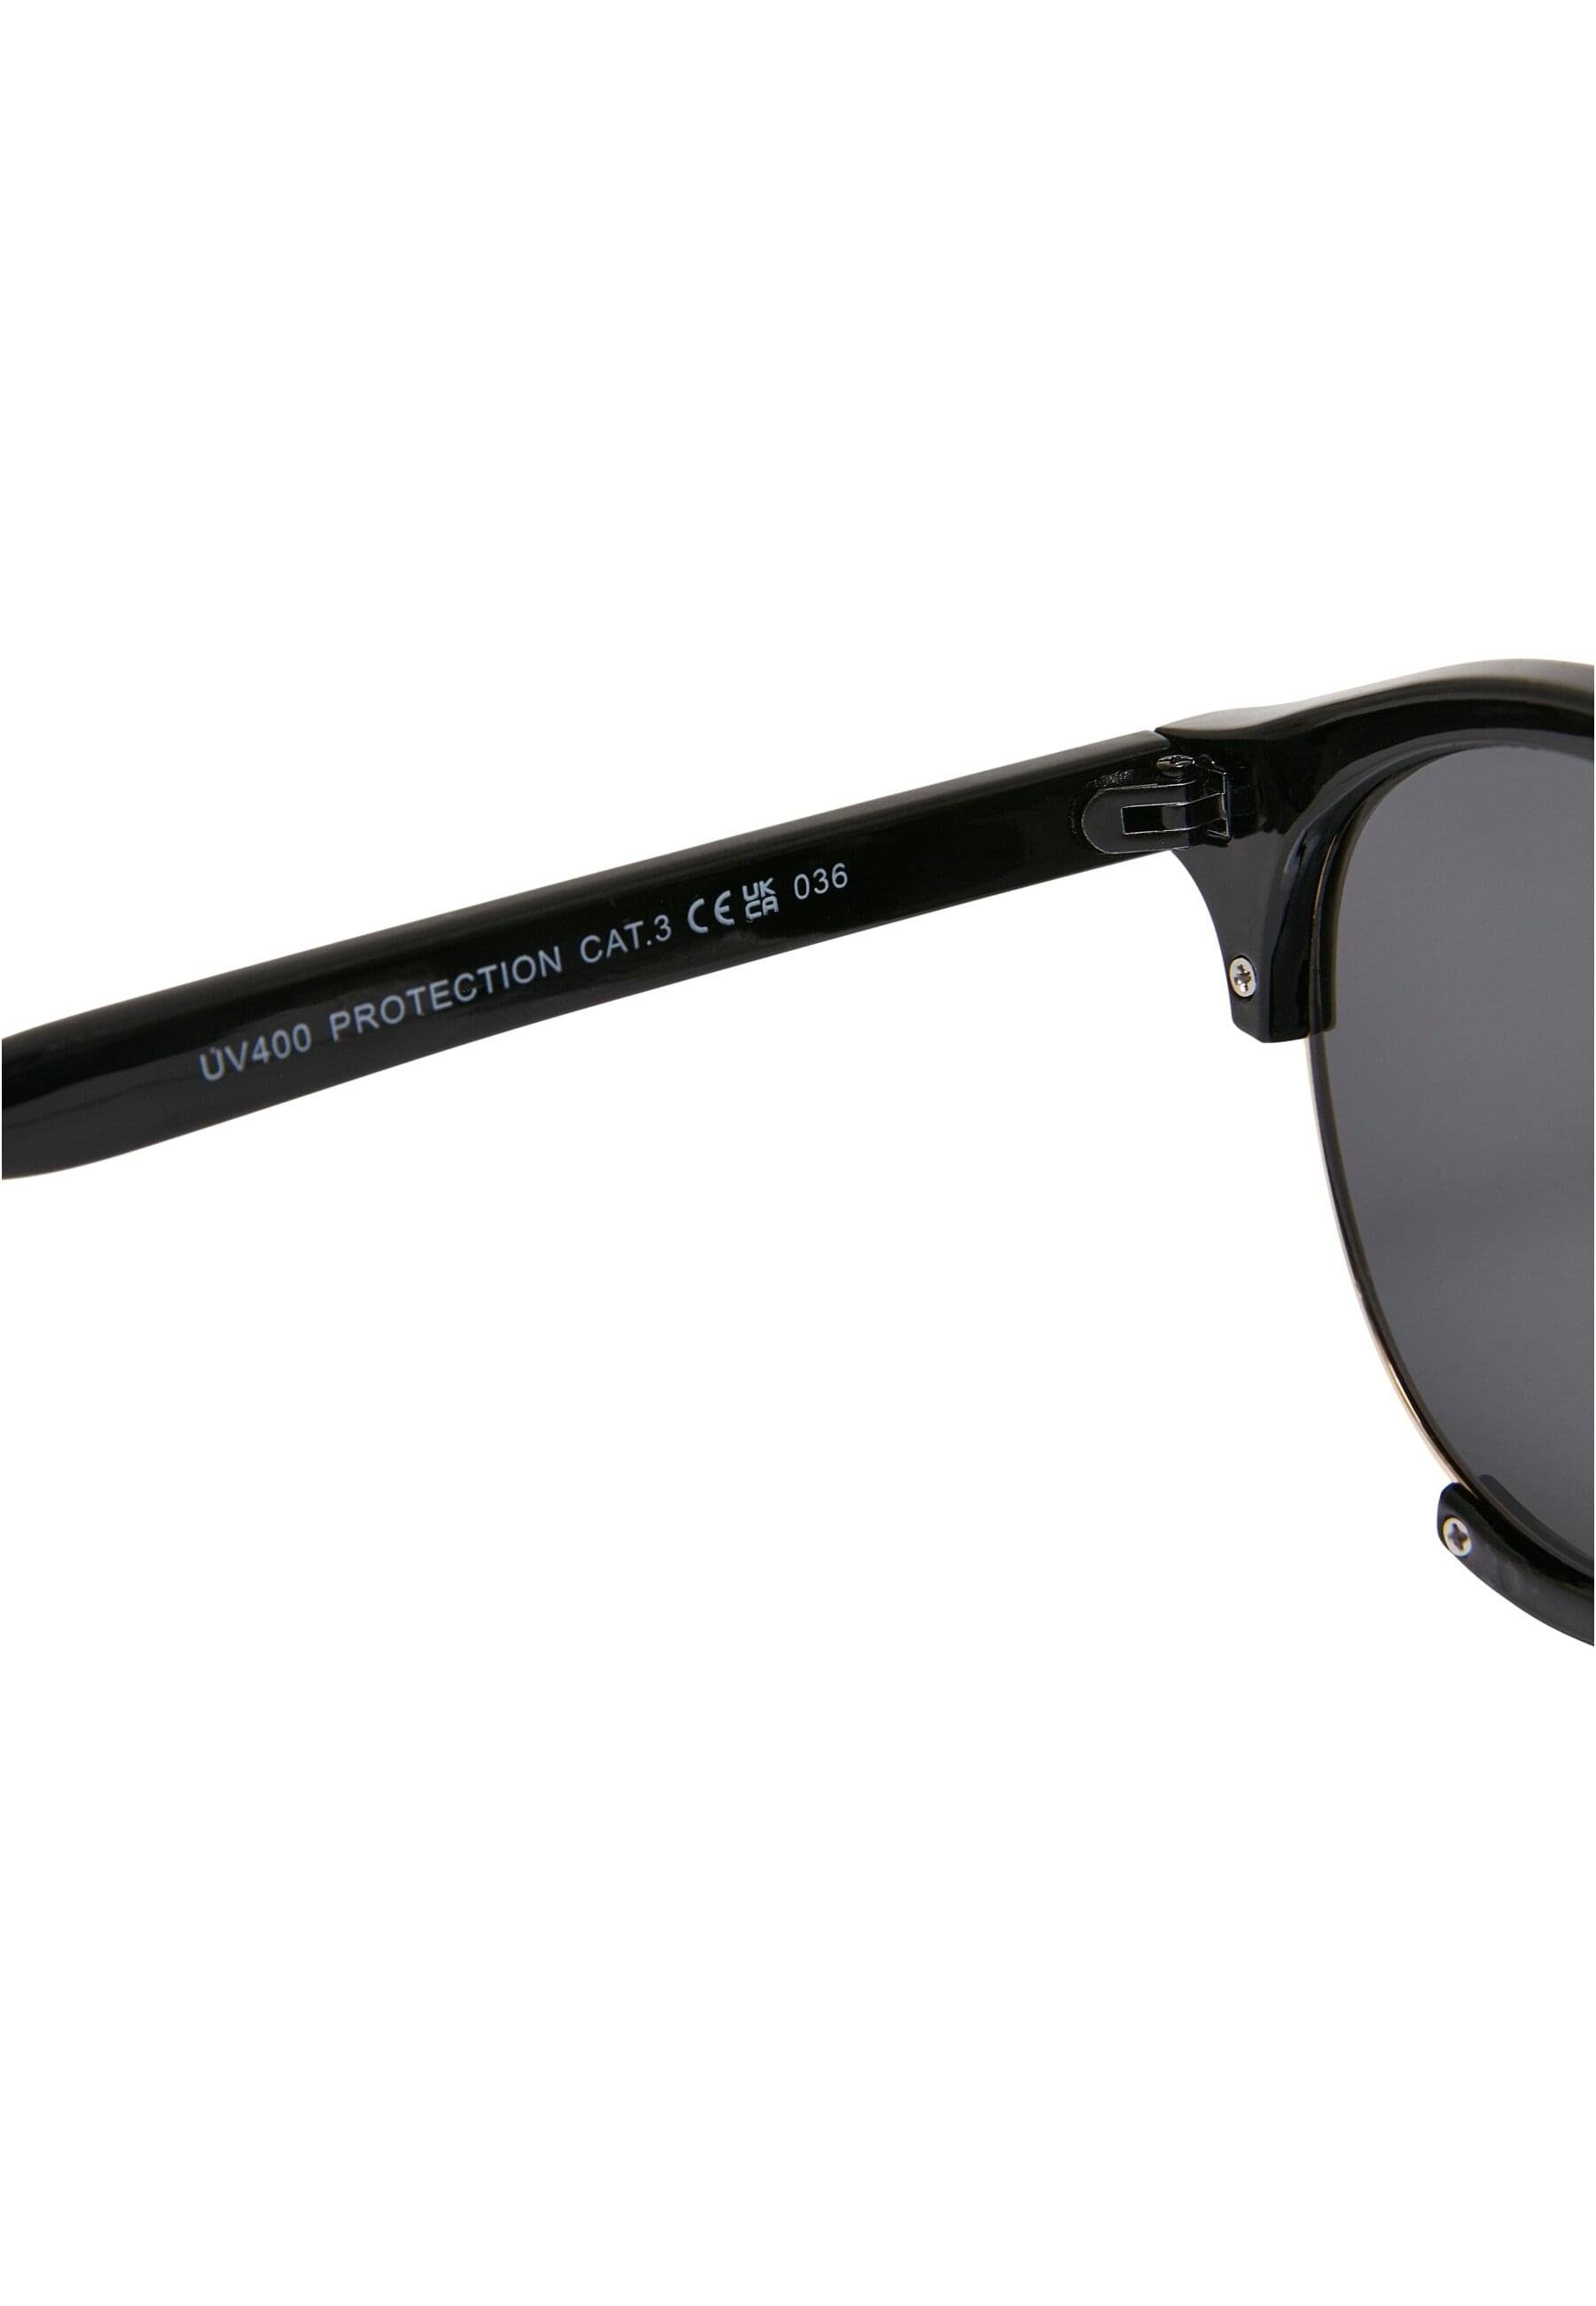 Sonnenbrille CLASSICS Bay URBAN black Unisex Coral Sunglasses